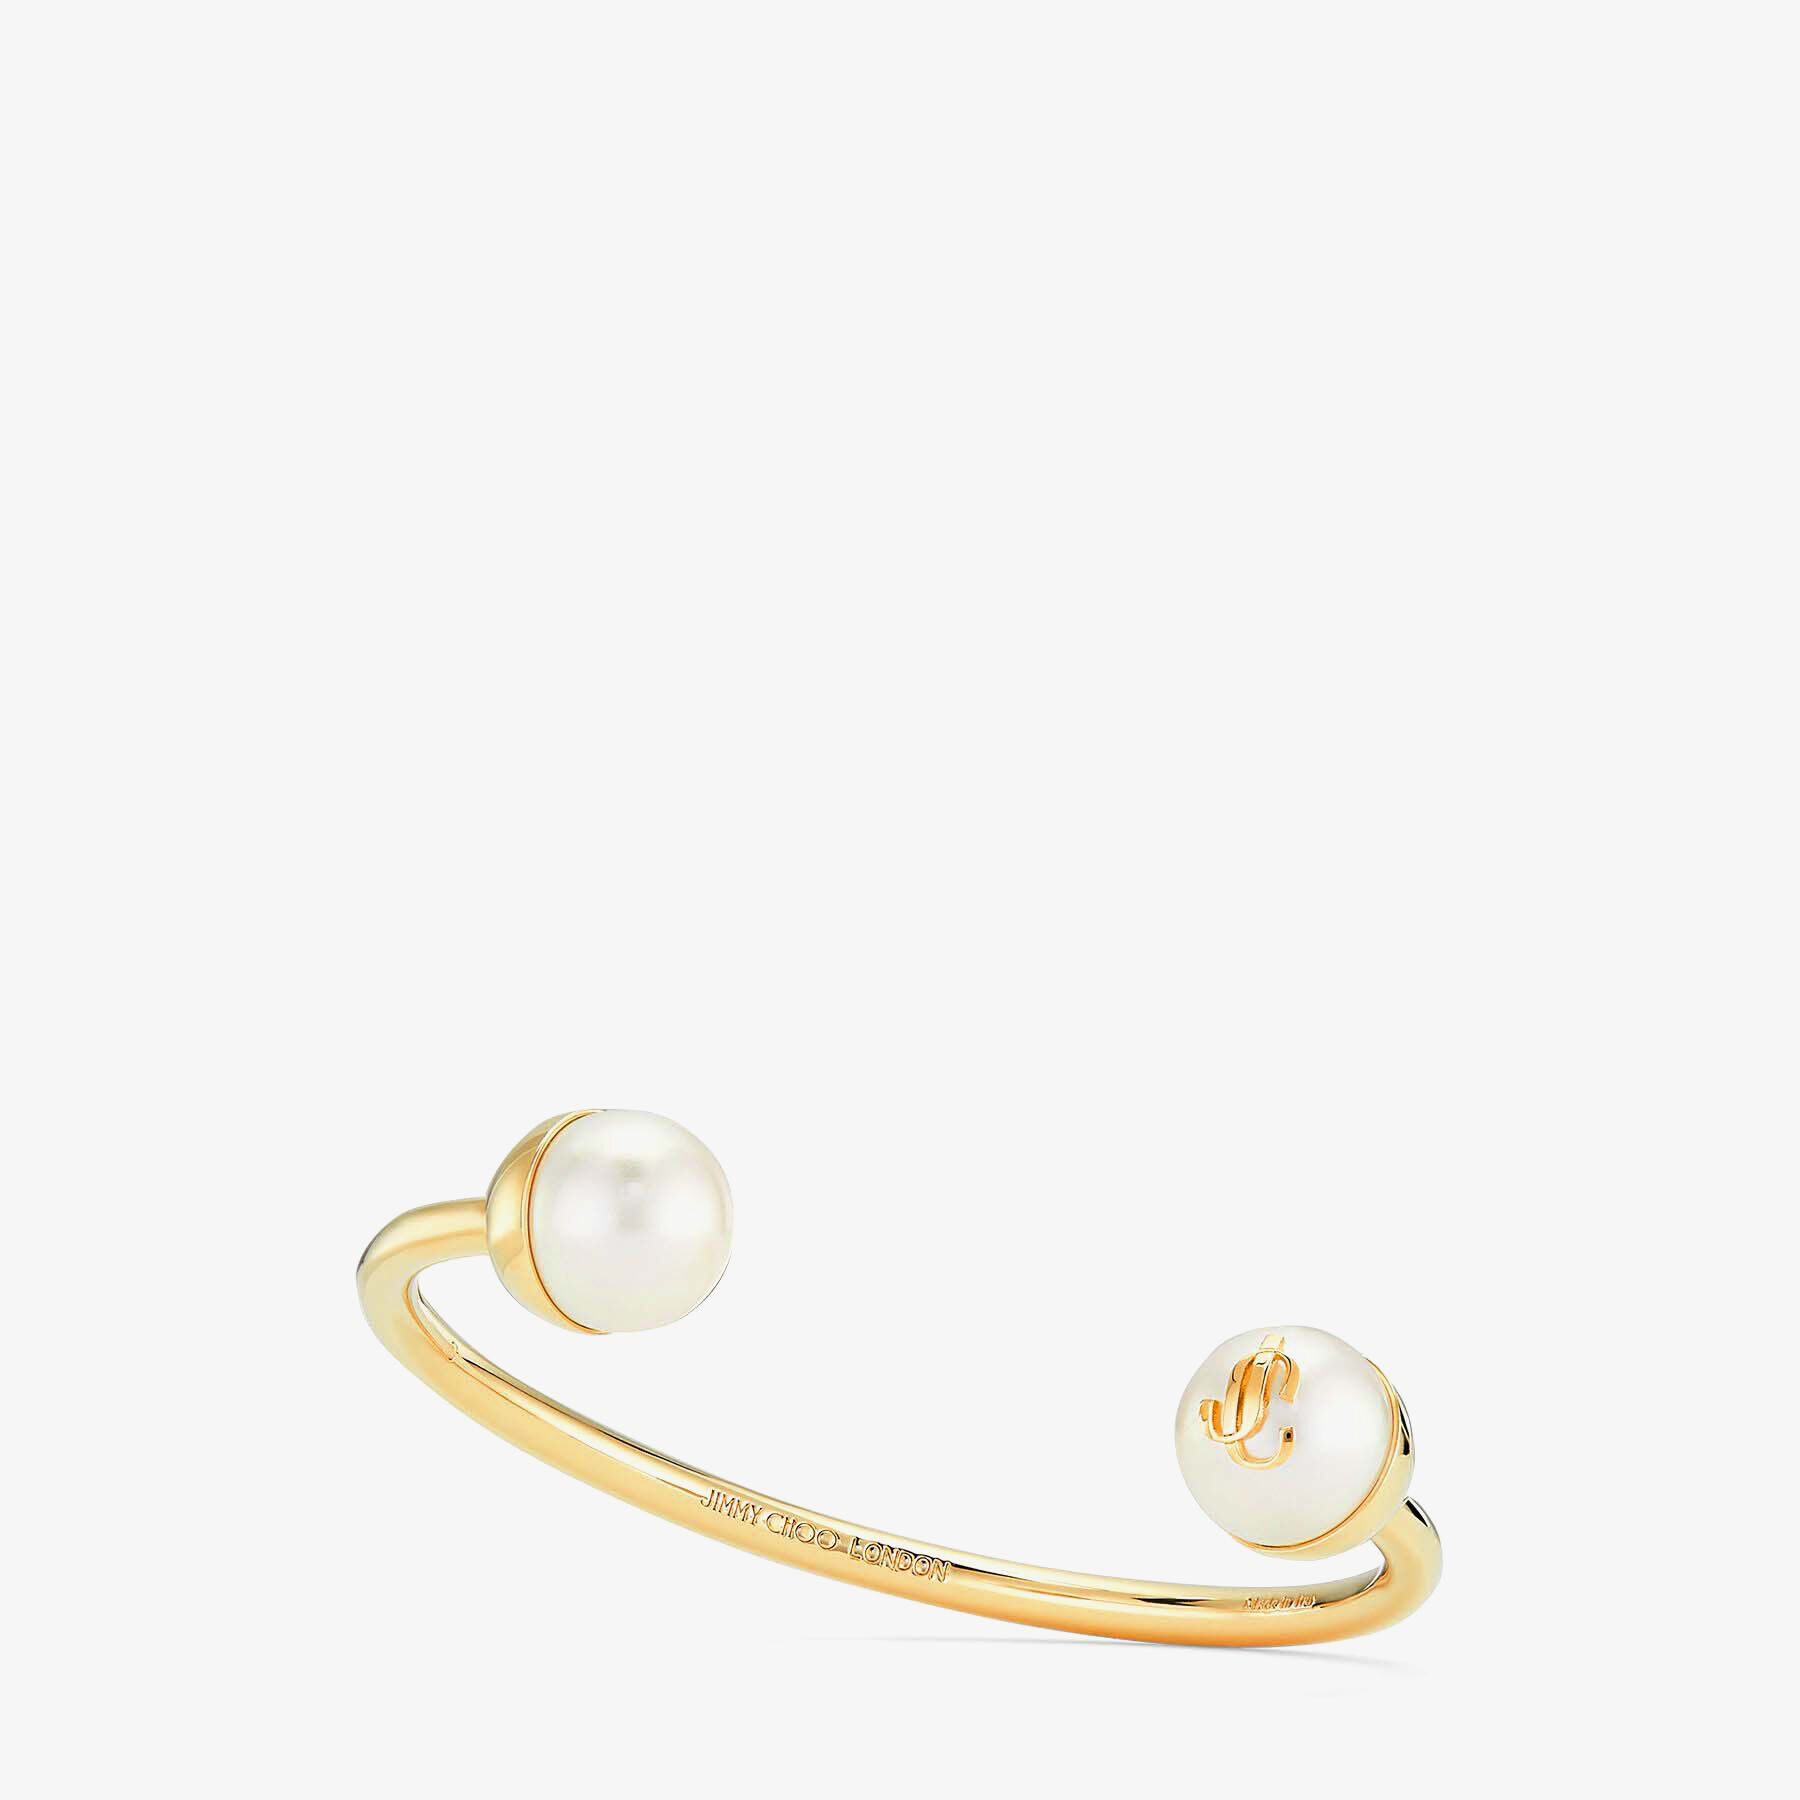 Gold-Finish Metal Cuff Bracelet with Pearls | JC Pearl Cuff